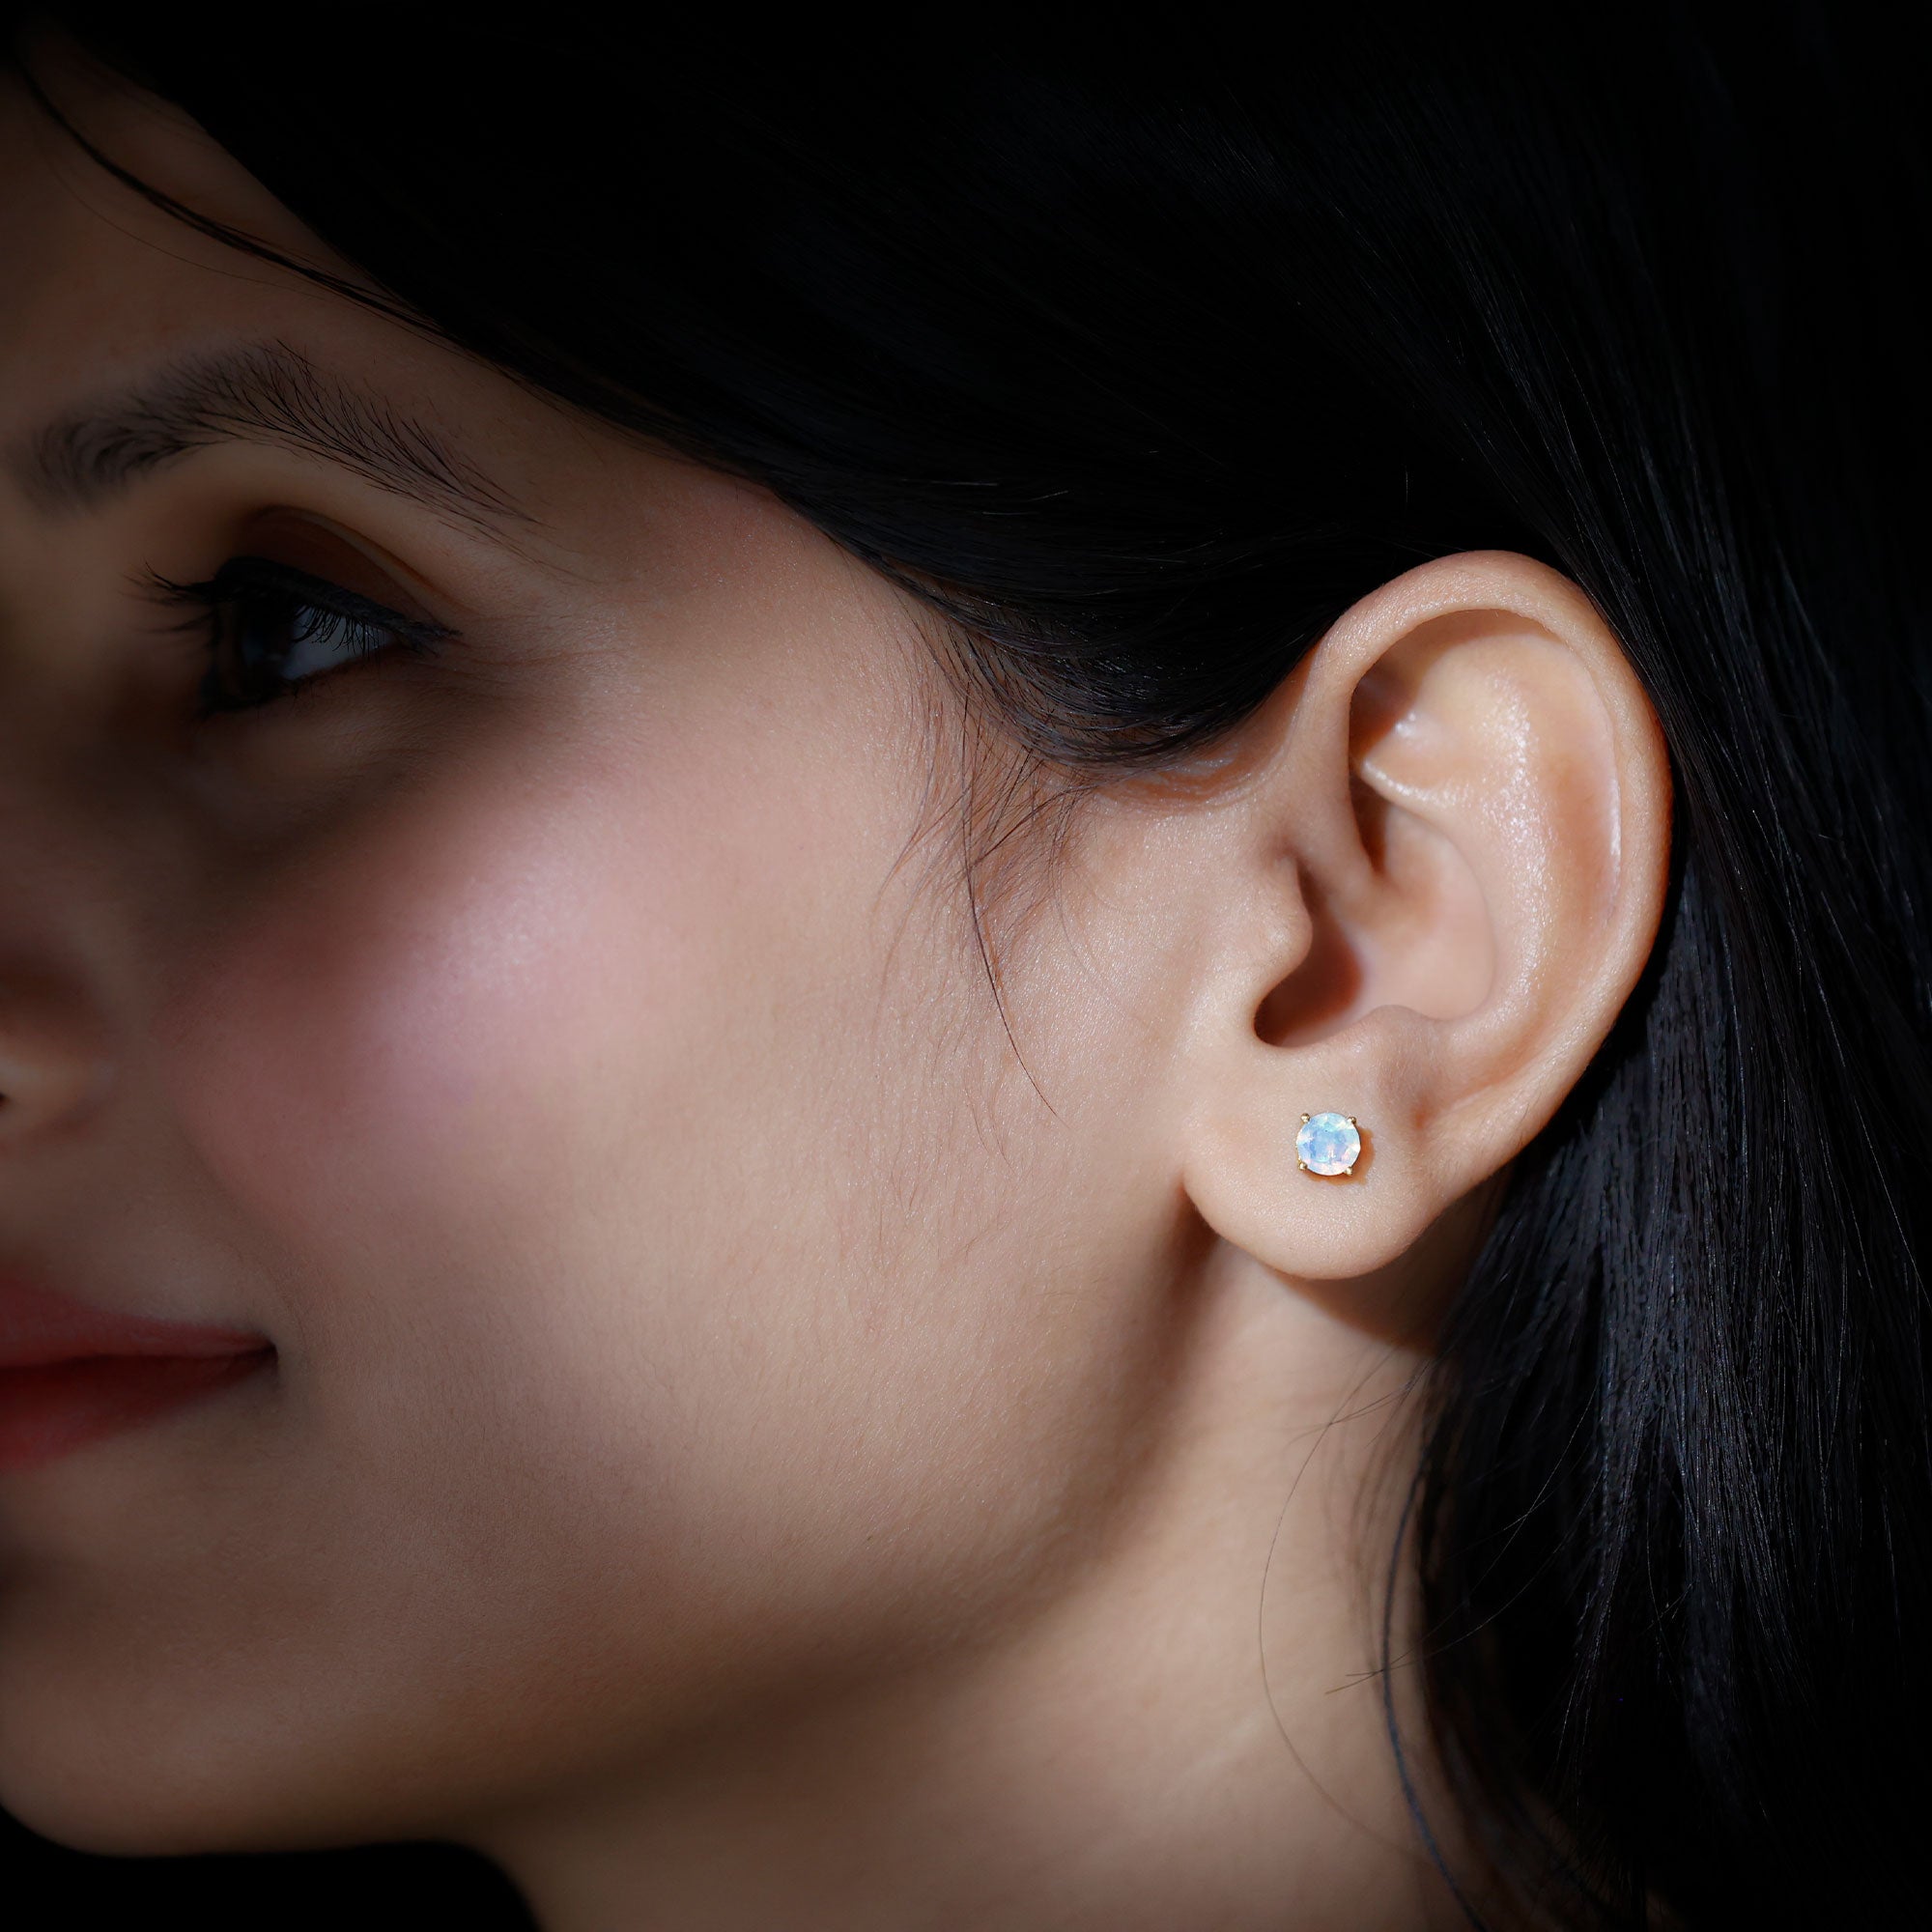 Round Shape Genuine Ethiopian Opal Solitaire Stud Earrings Ethiopian Opal - ( AAA ) - Quality - Rosec Jewels